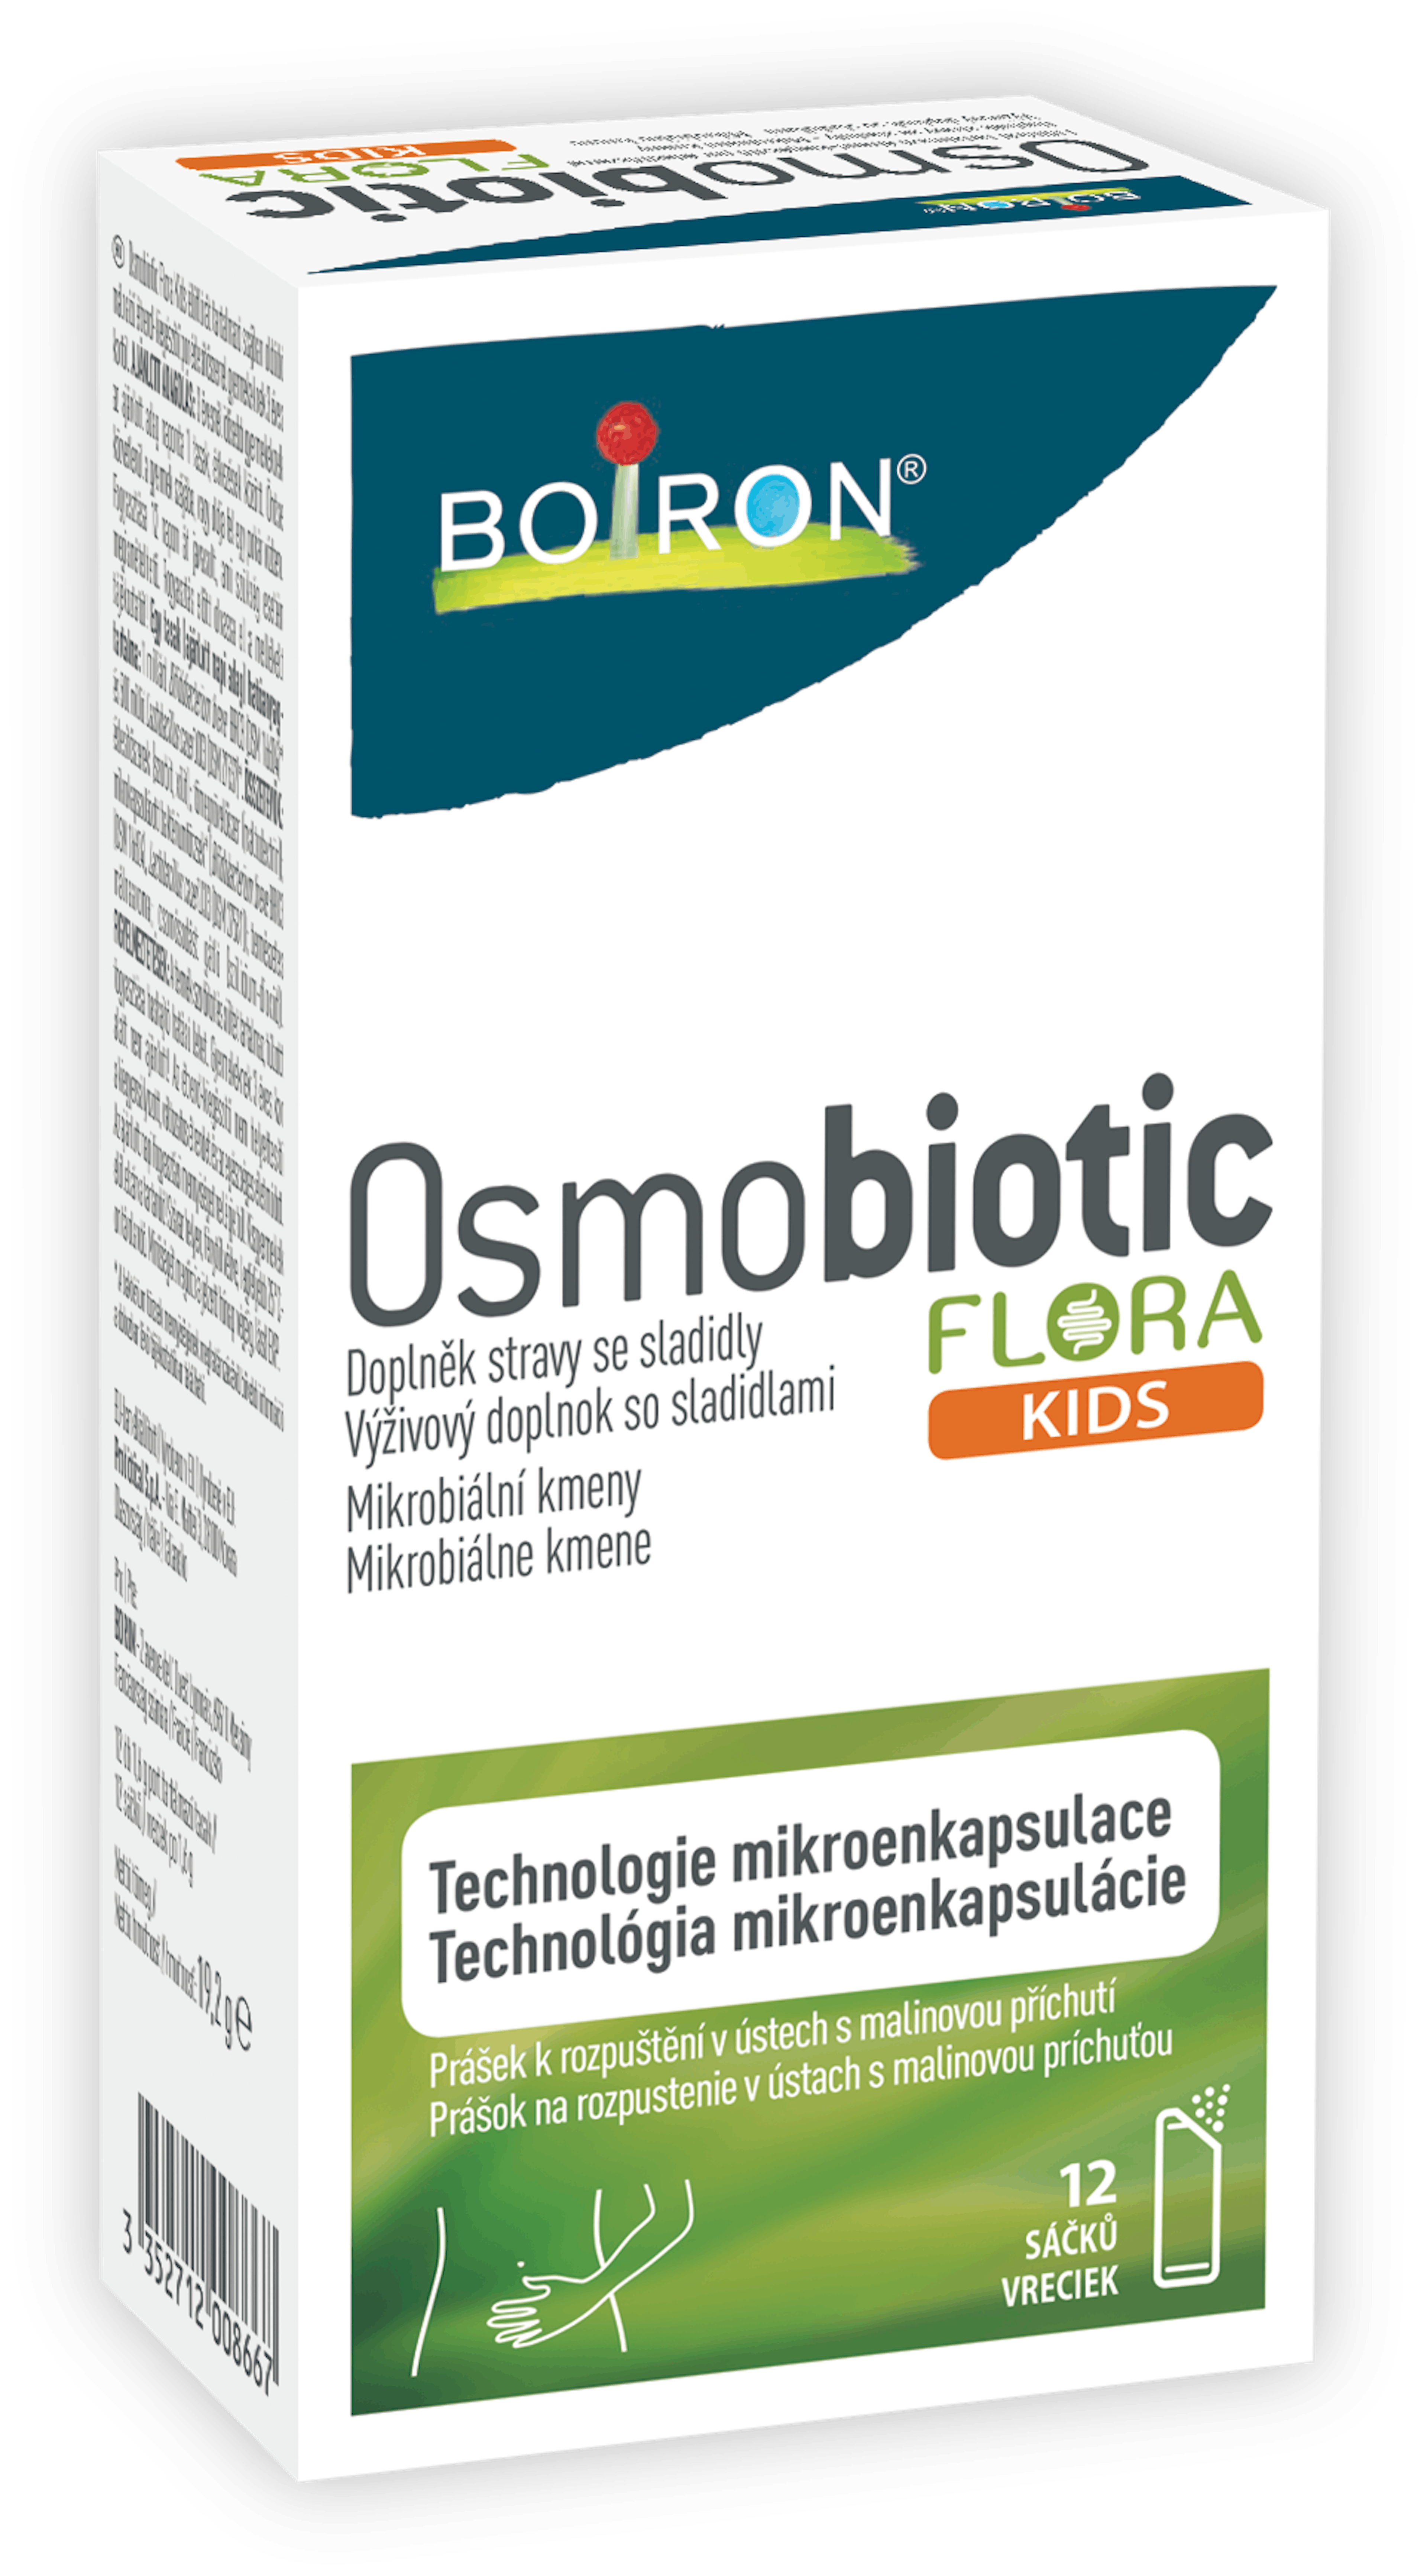 Osmobiotic Flora Kids krabicka bez pozadi